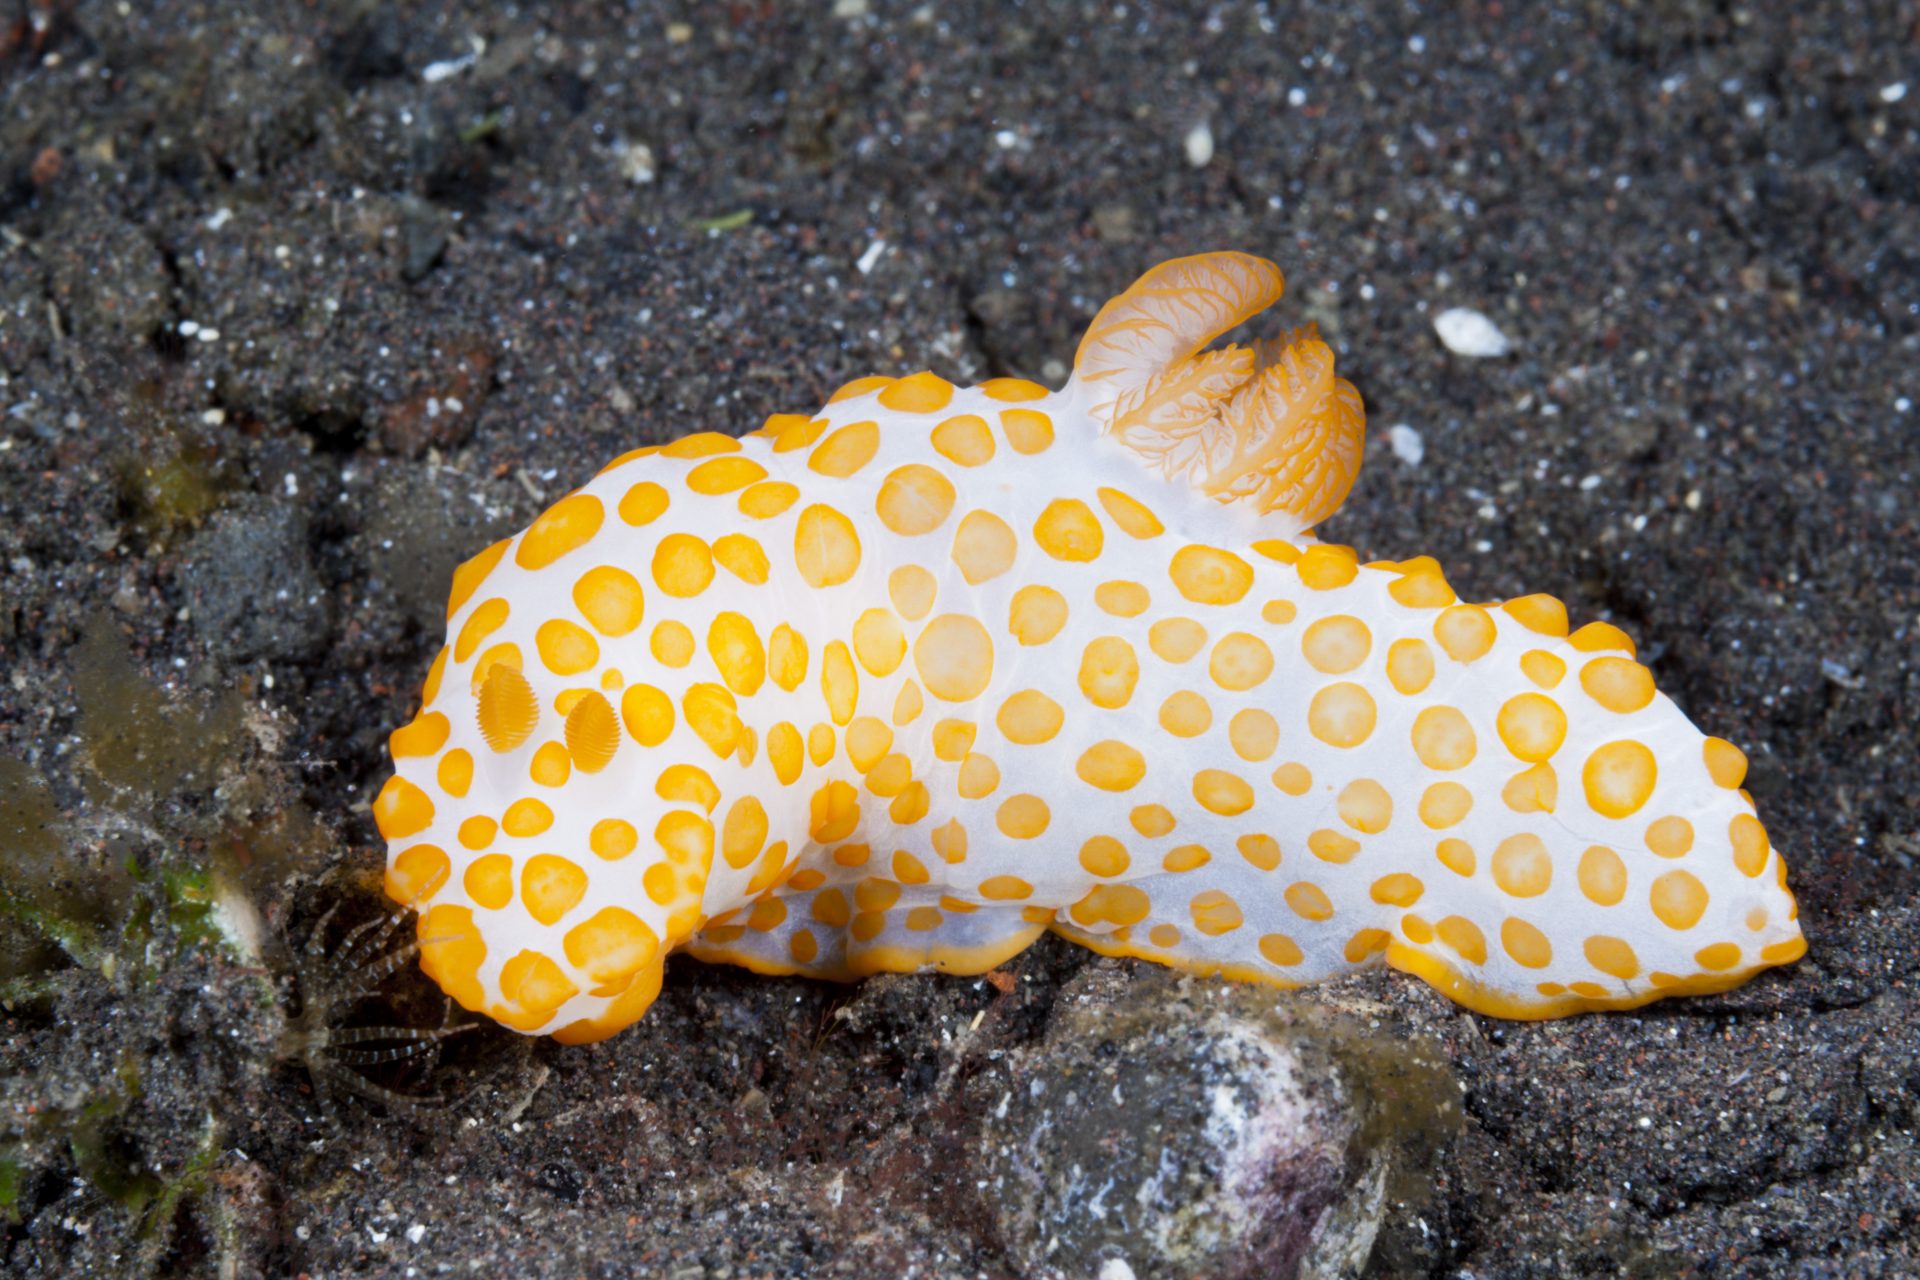 Yellow-spotted sea slug